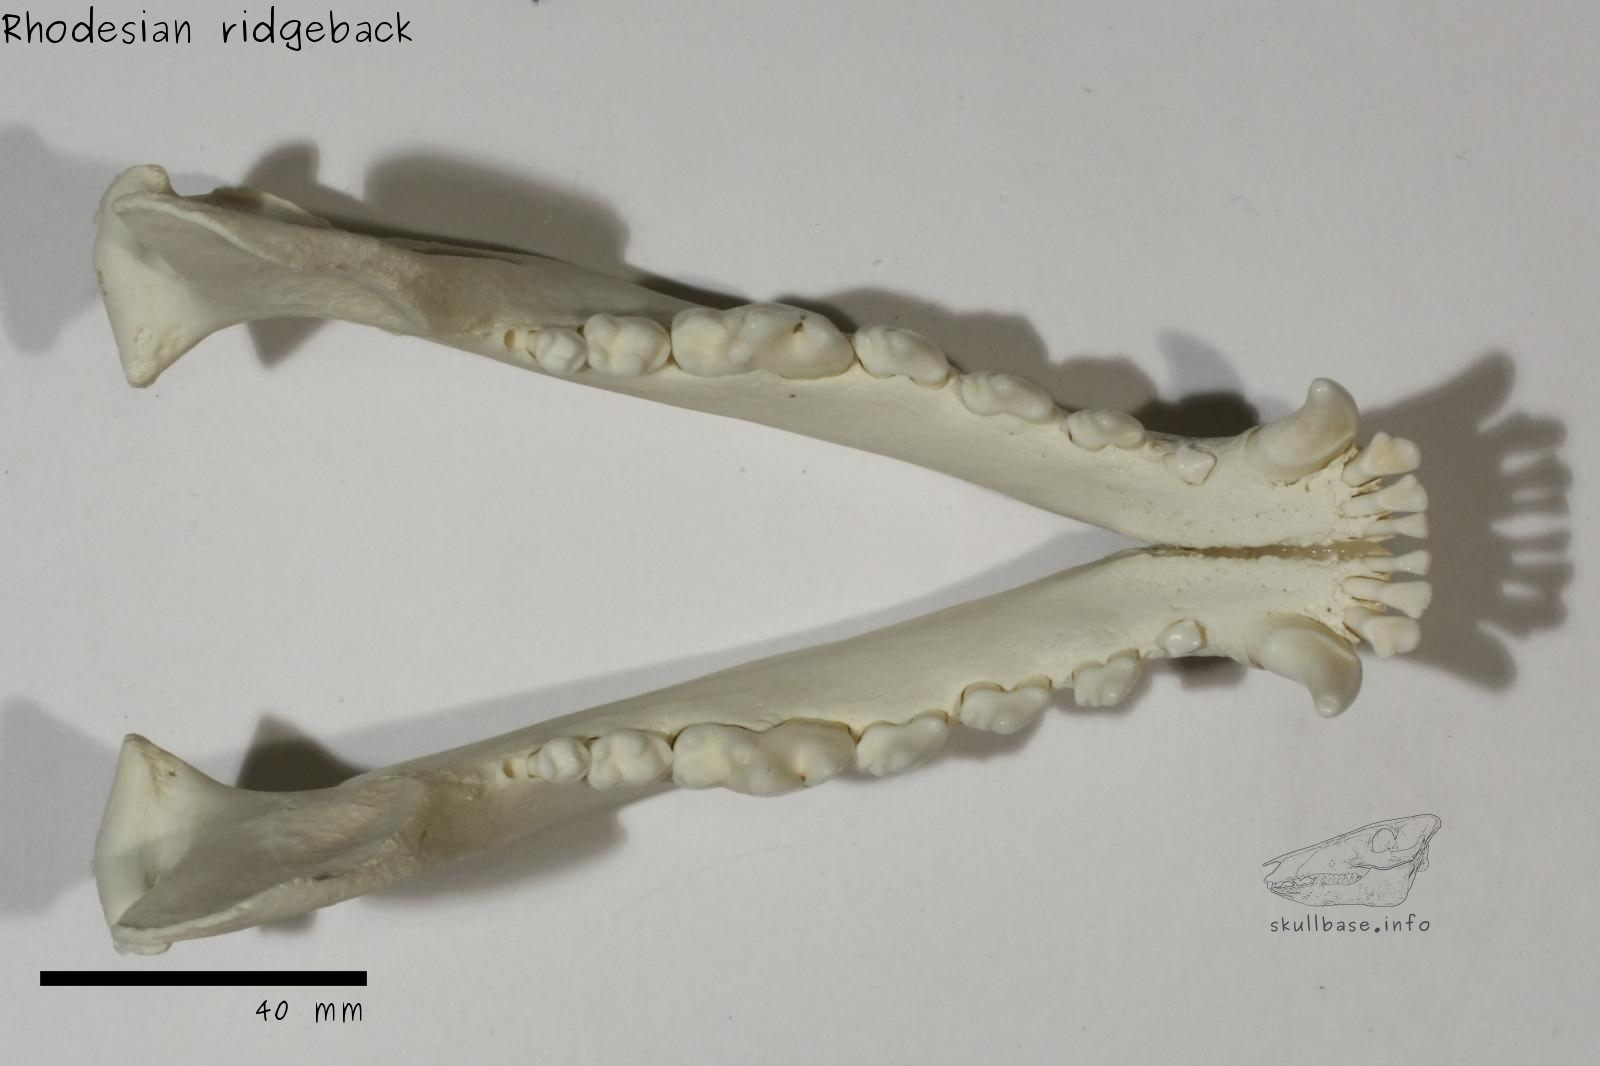 Rhodesian ridgeback (Canis lupus familiaris) jaw